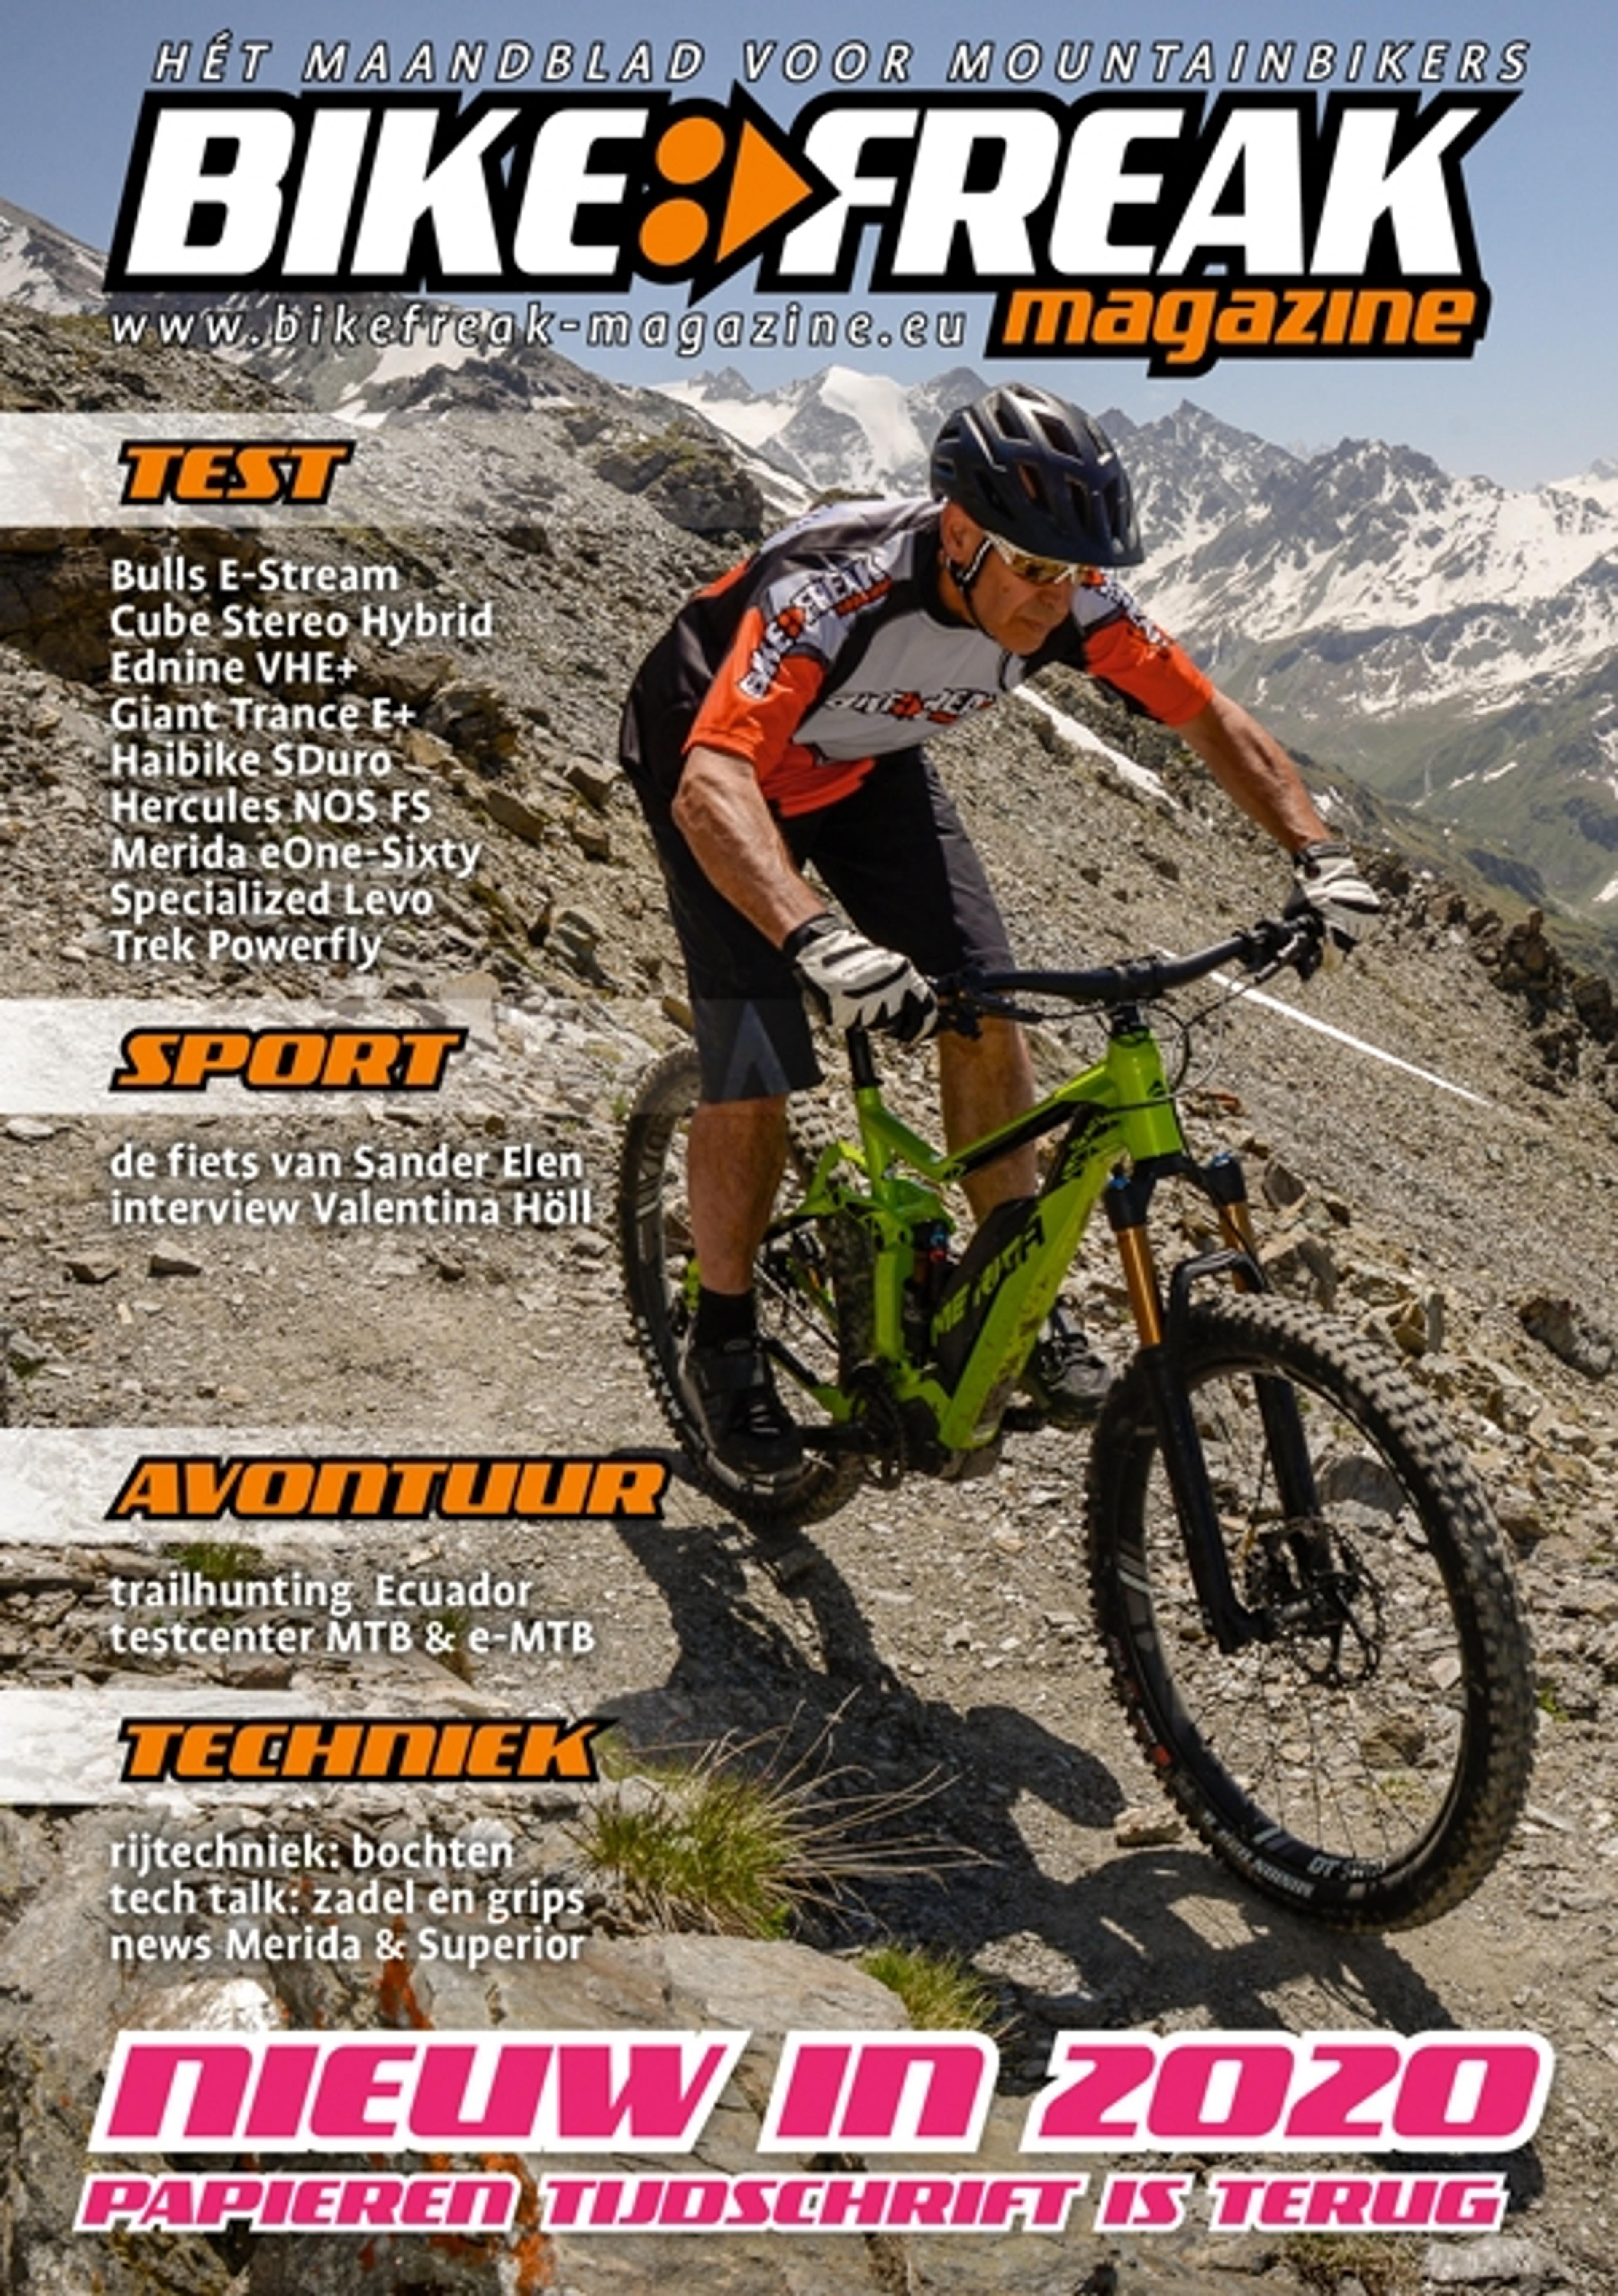 Bikefreak-magazine nu ook in print